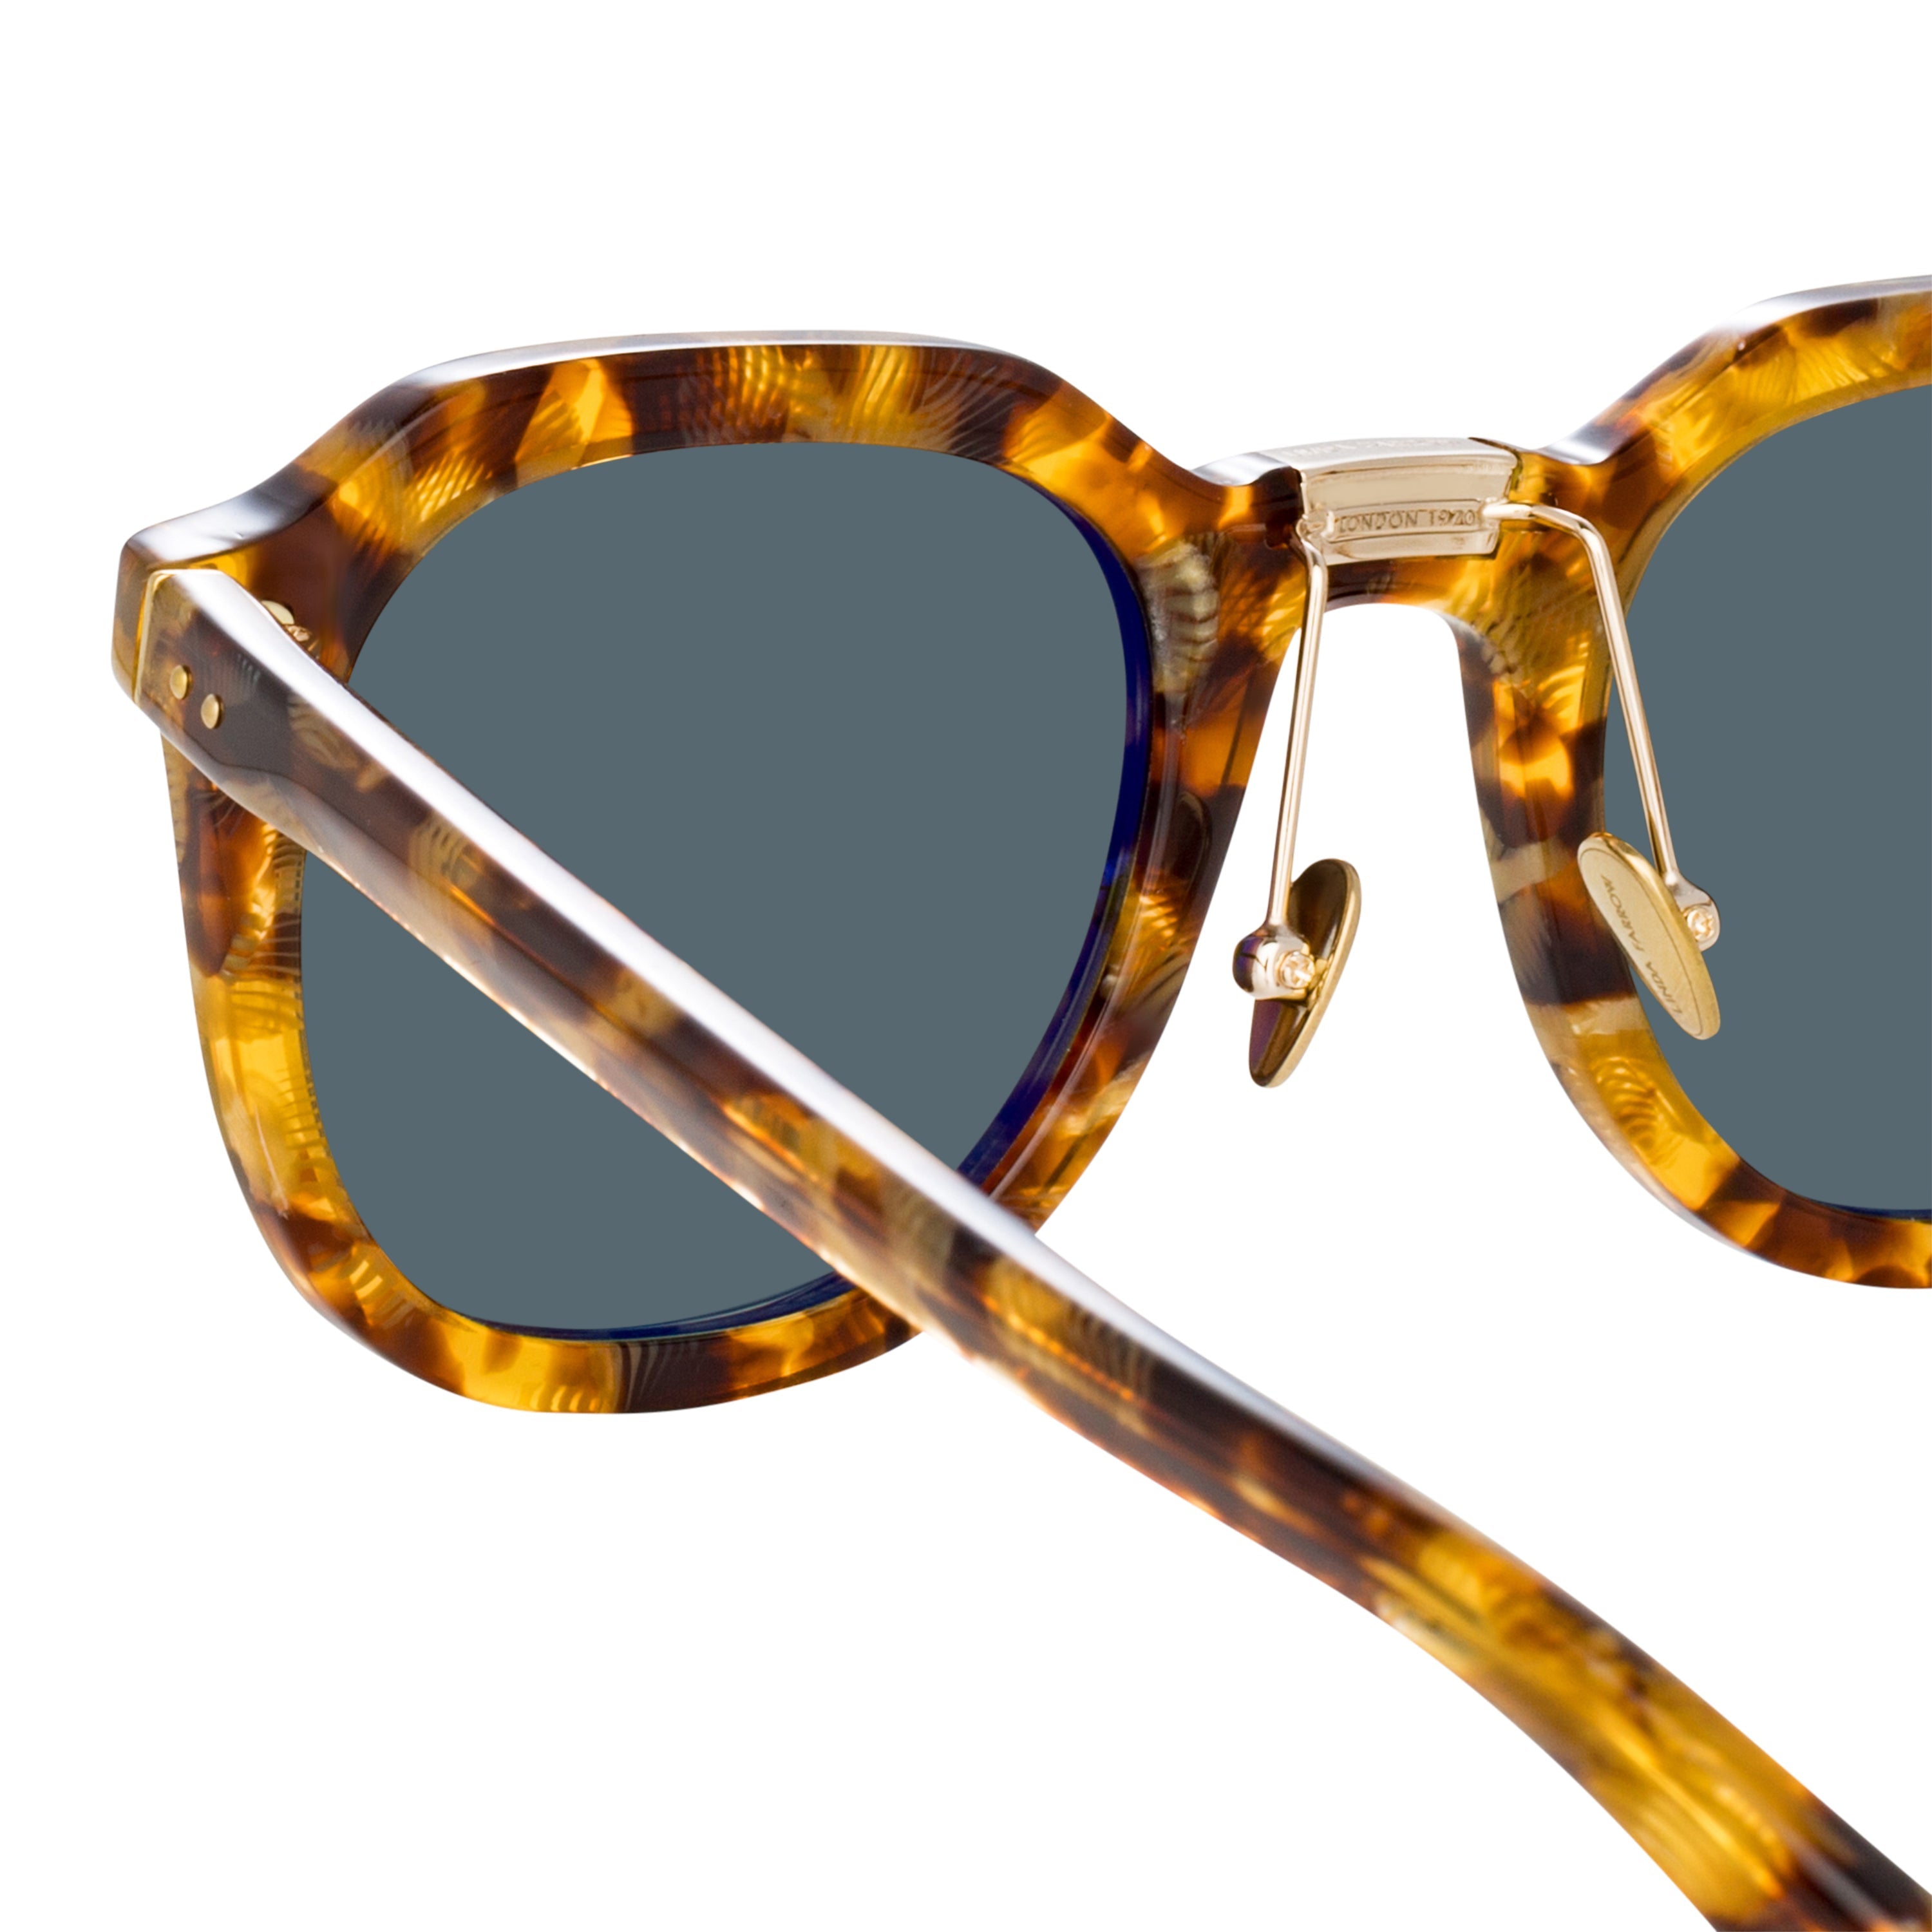 Color_LFL1103C9SUN - Fletcher Angular Sunglasses in Tobacco Tortoiseshell and Green